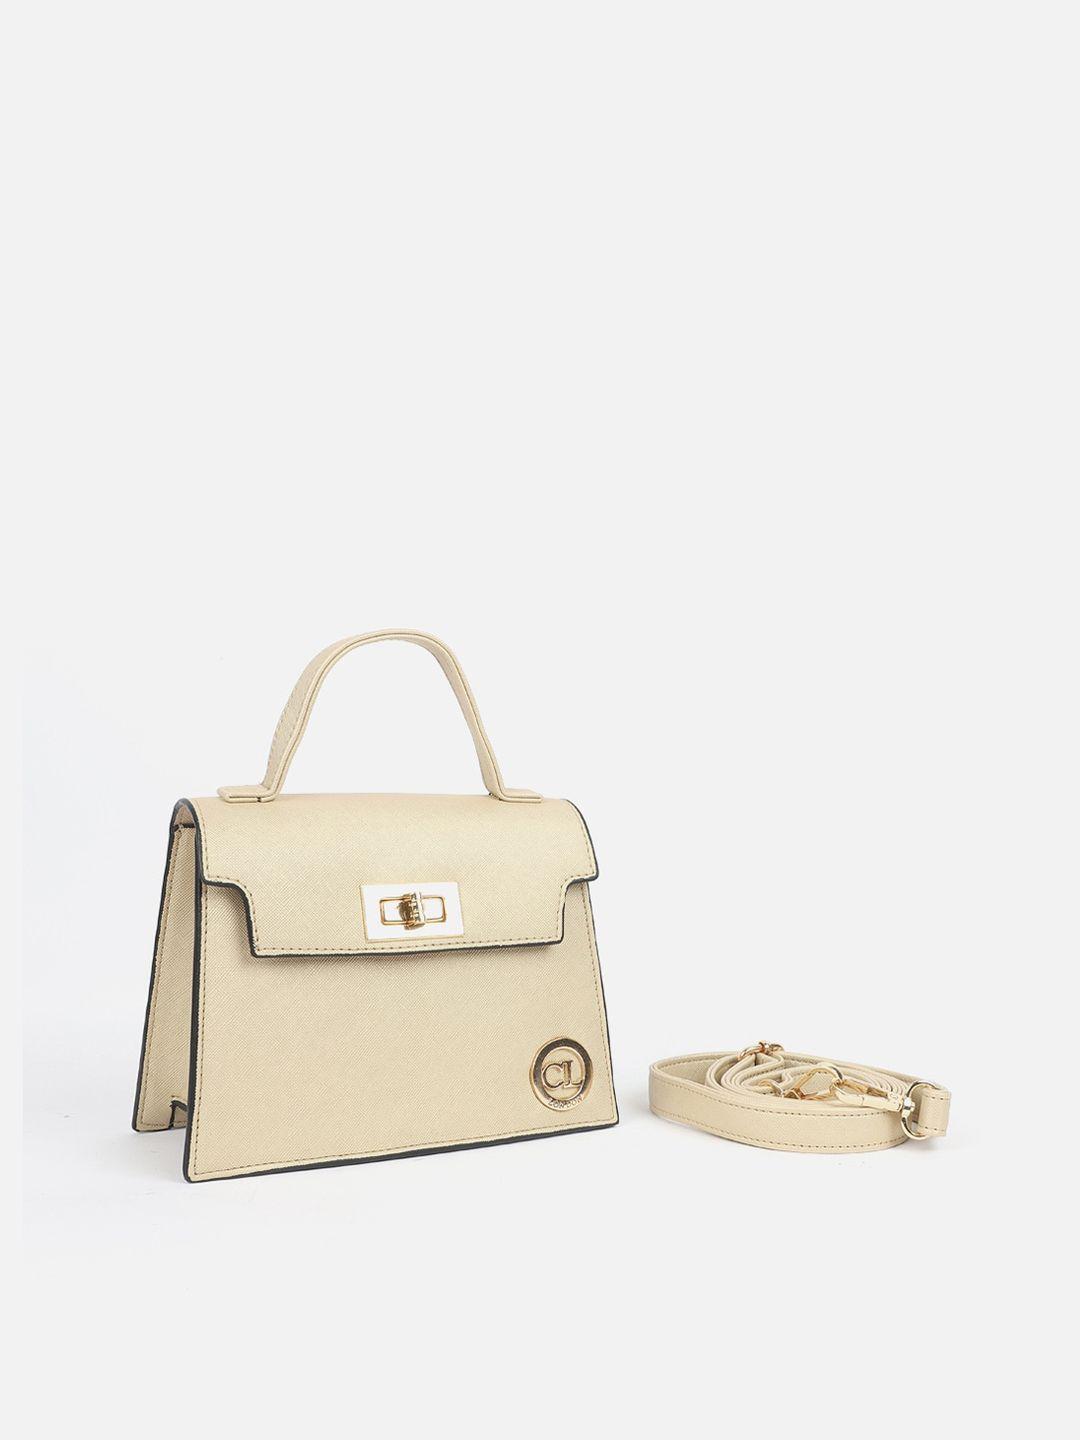 carlton-london-textured-structured-satchel-bag